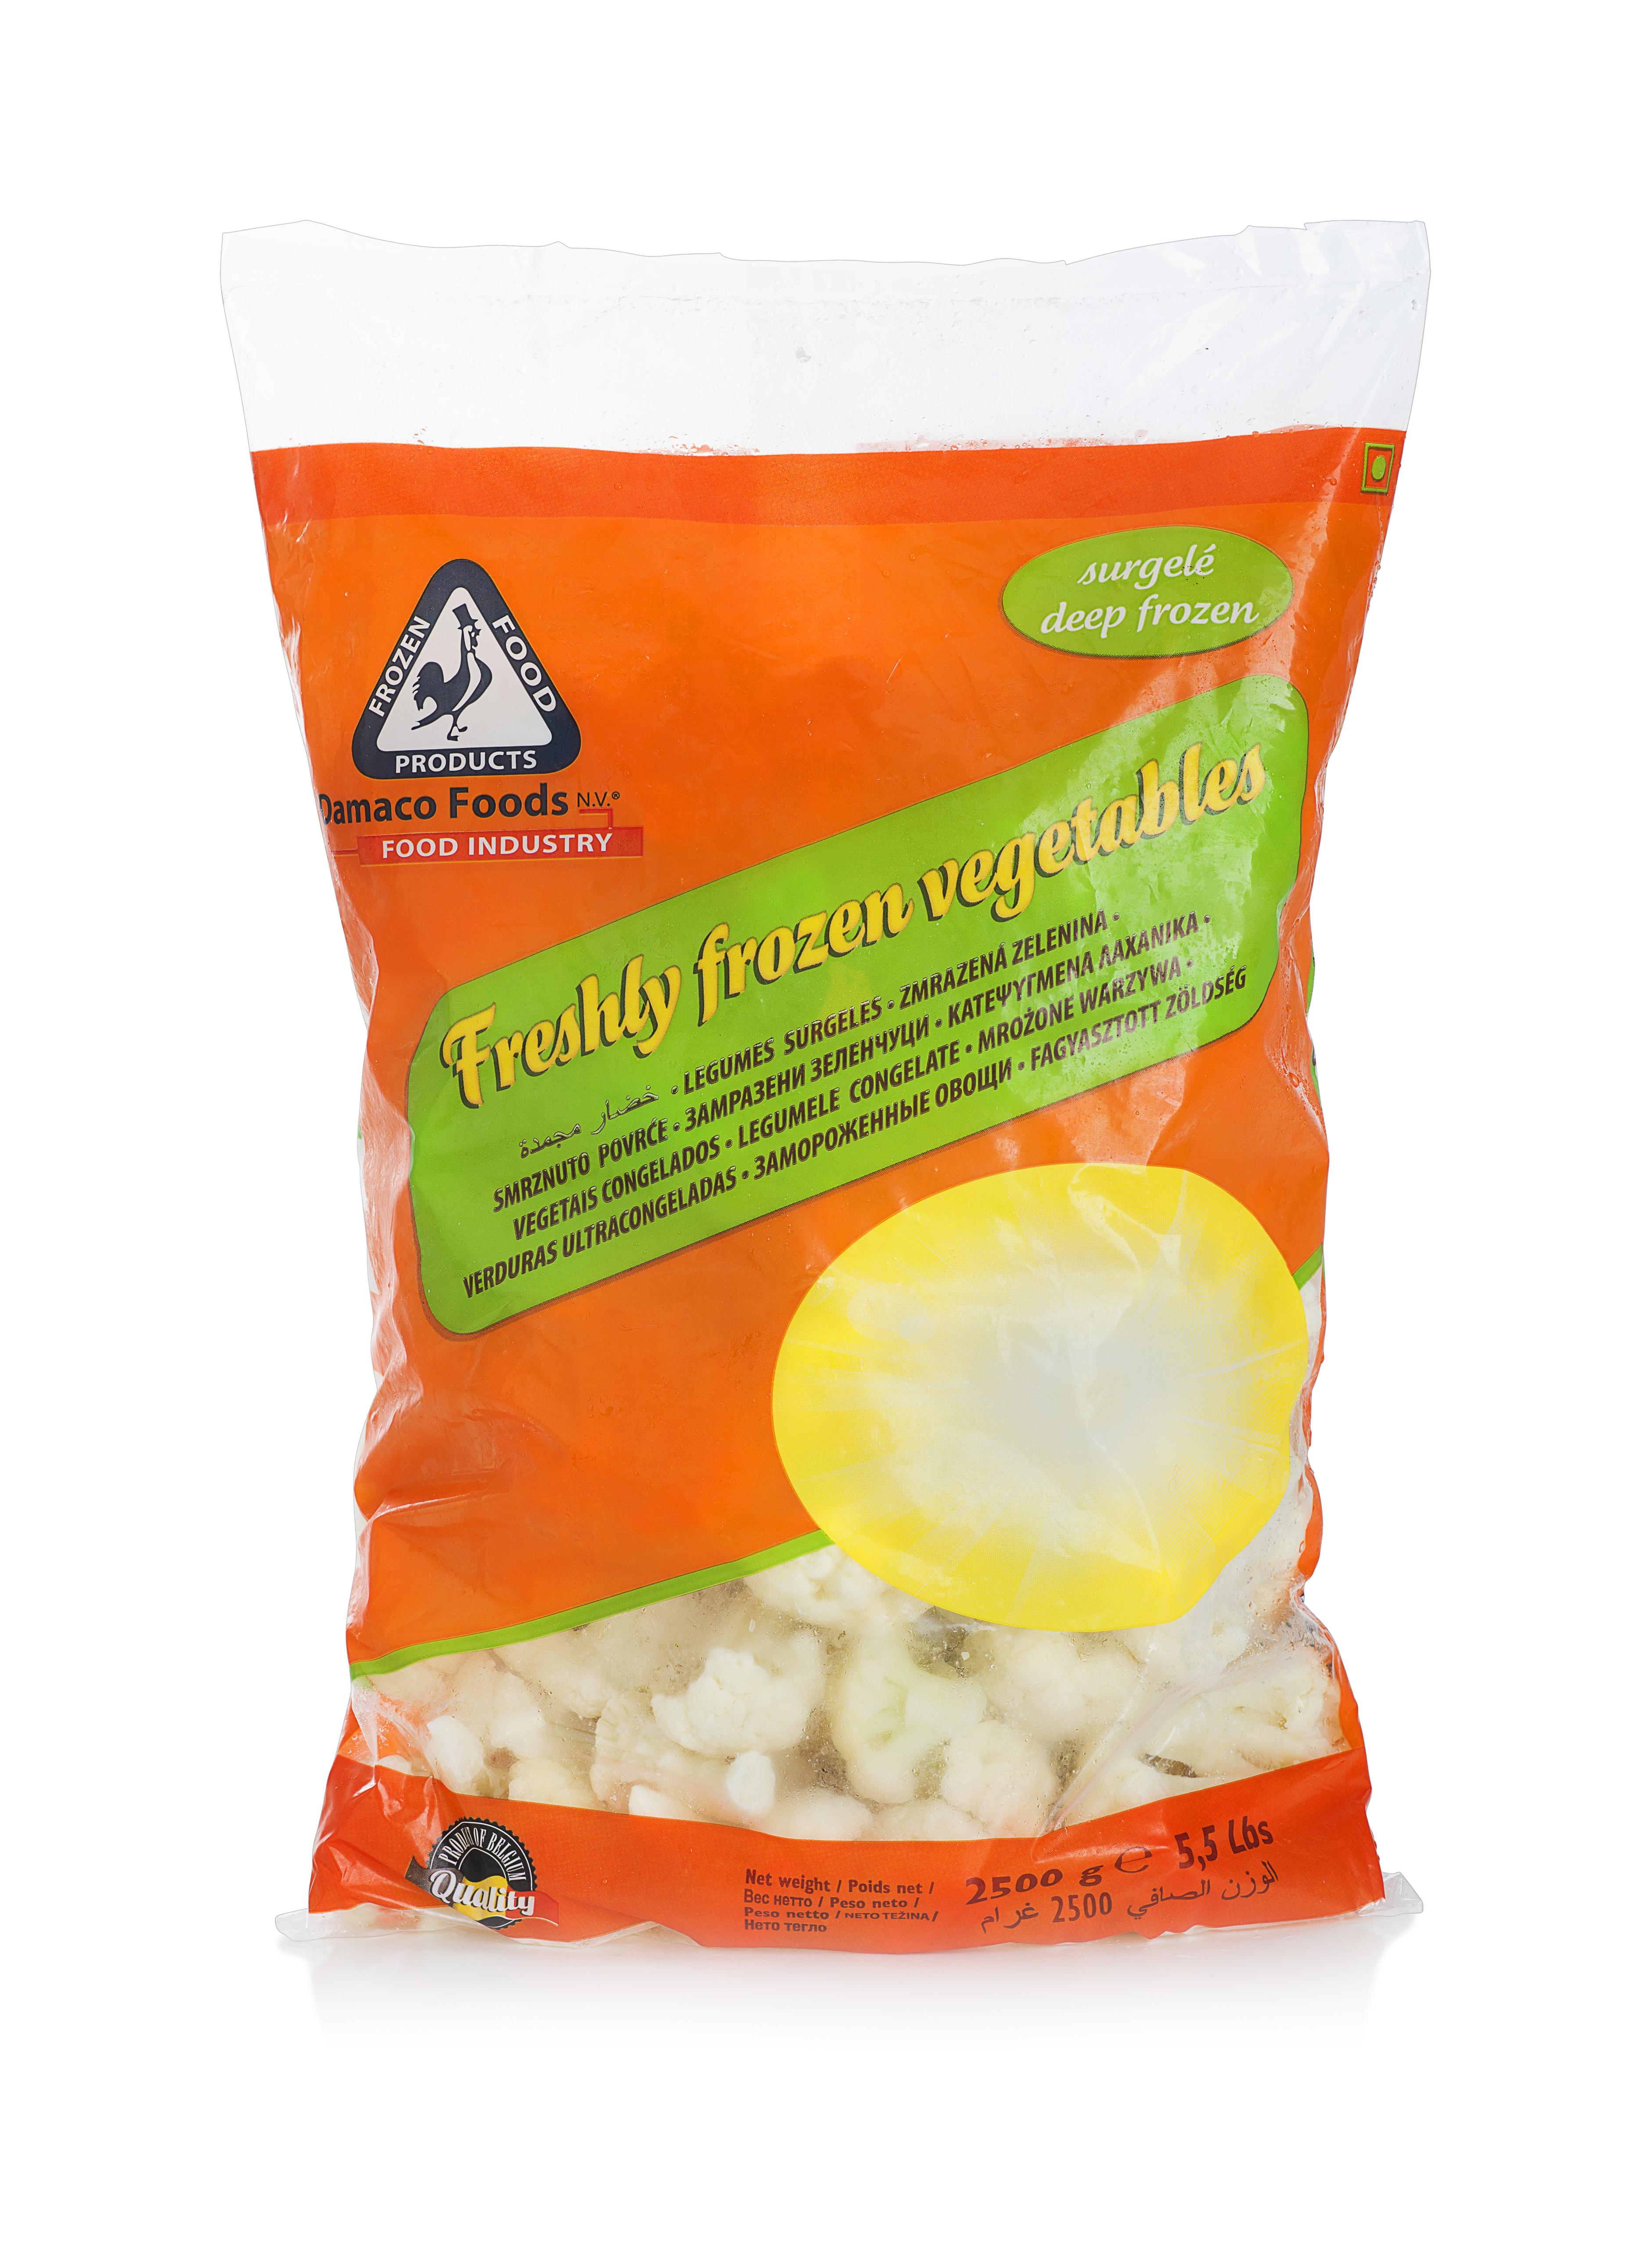 cauliflower Damaco brand packaging 